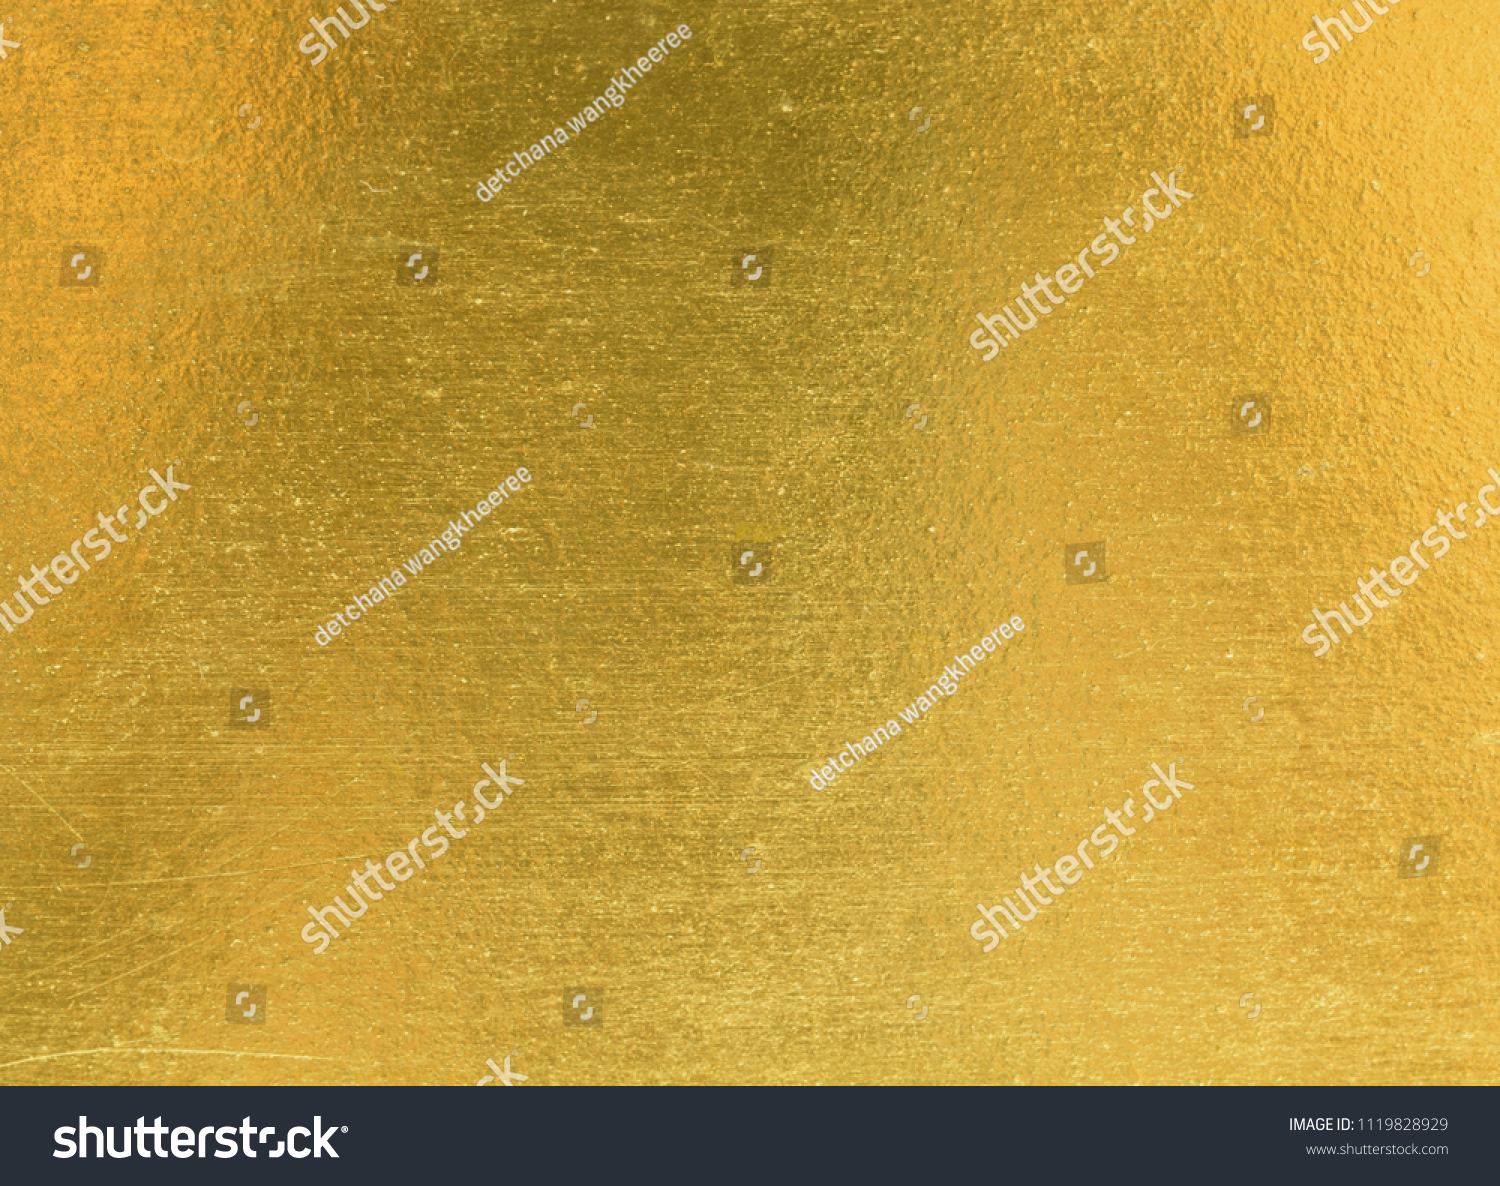 Gold foil texture background #1119828929